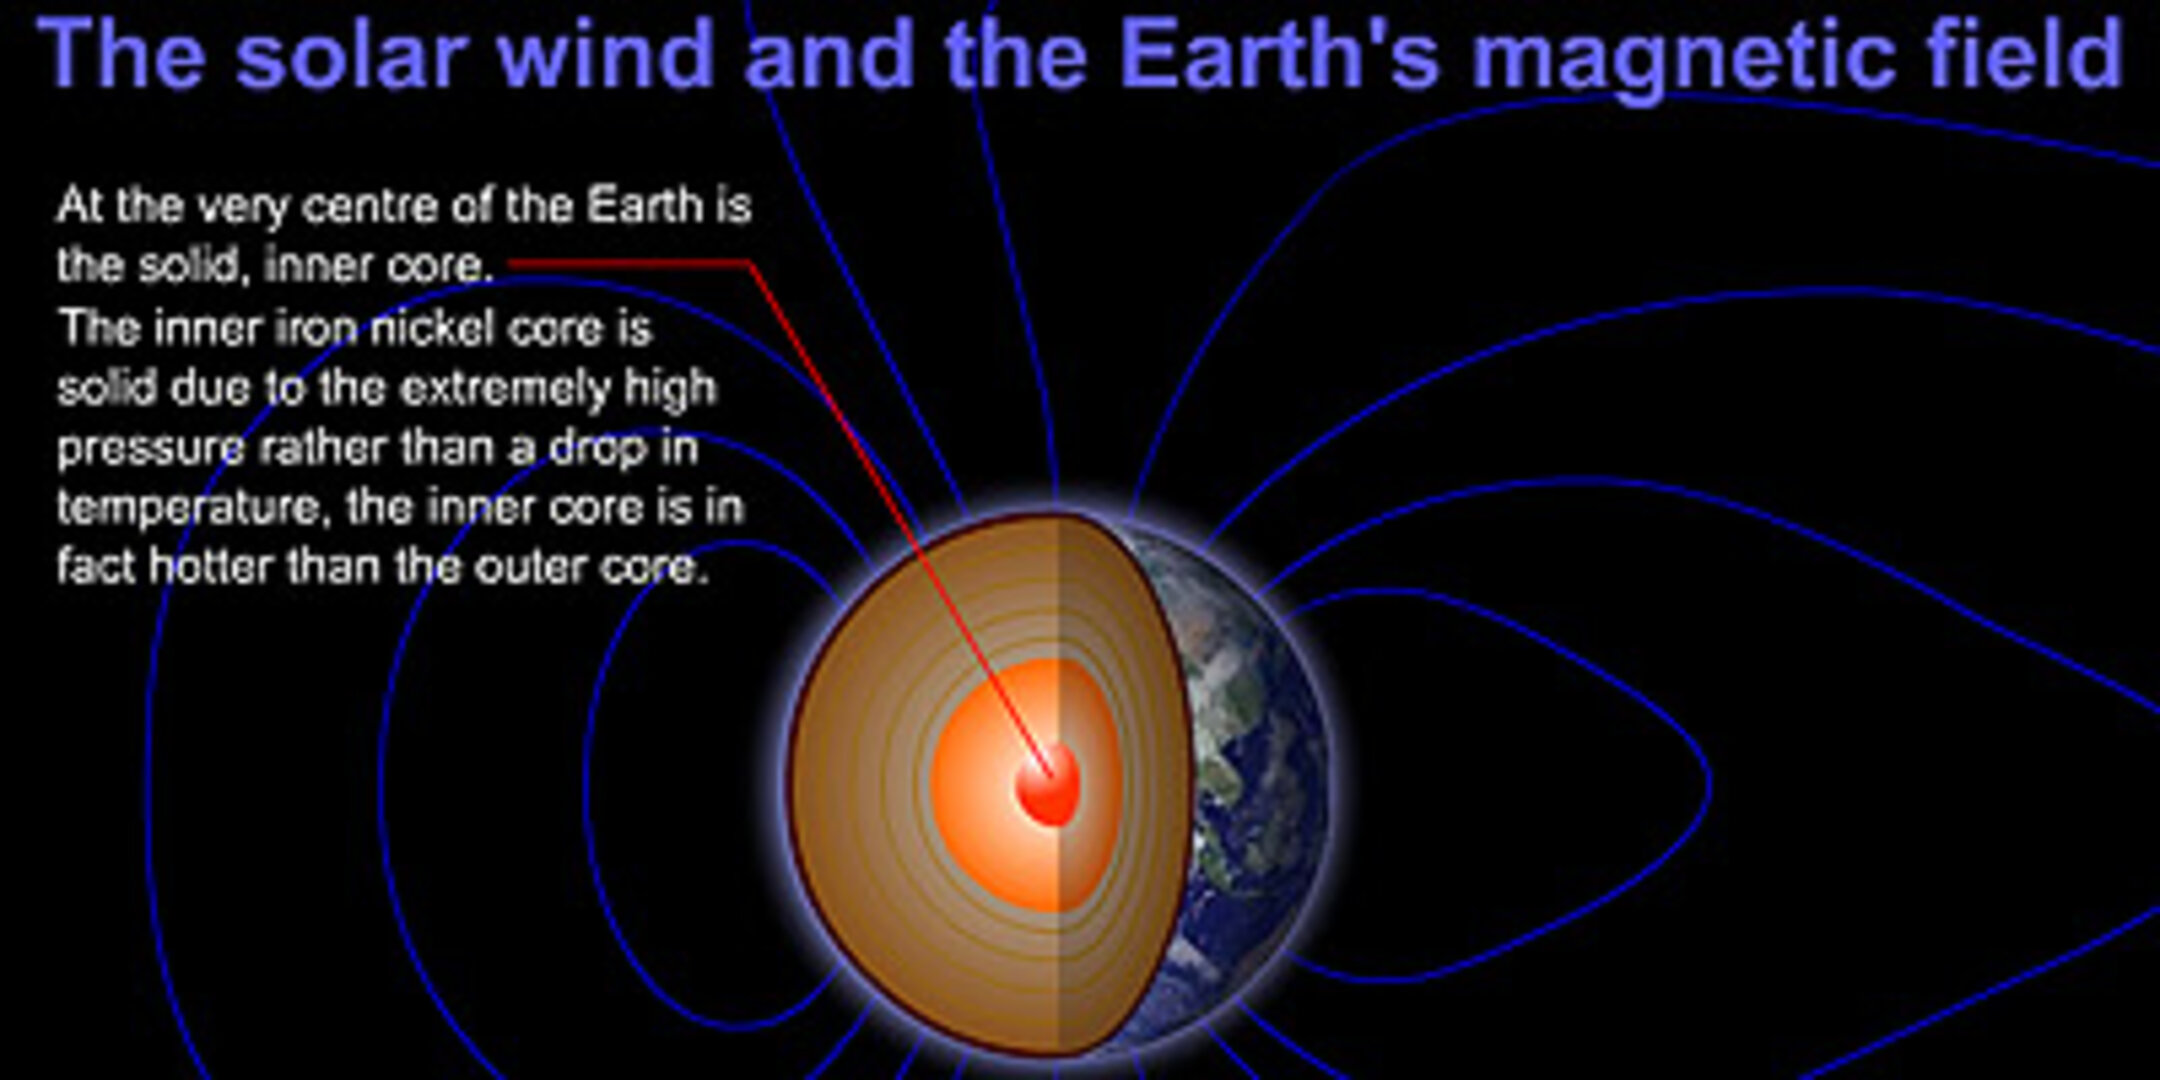 ESA - Planetary magnetic field animation